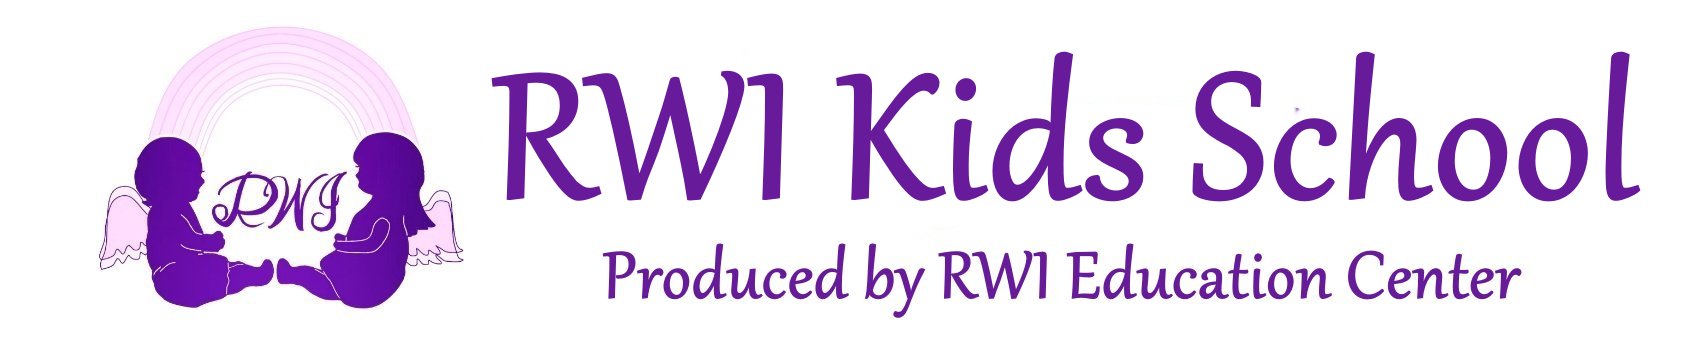 RWI Kidsschool-「英語・多様性・国際感覚」3つの基礎をつくるためのRWI独自の英語教室